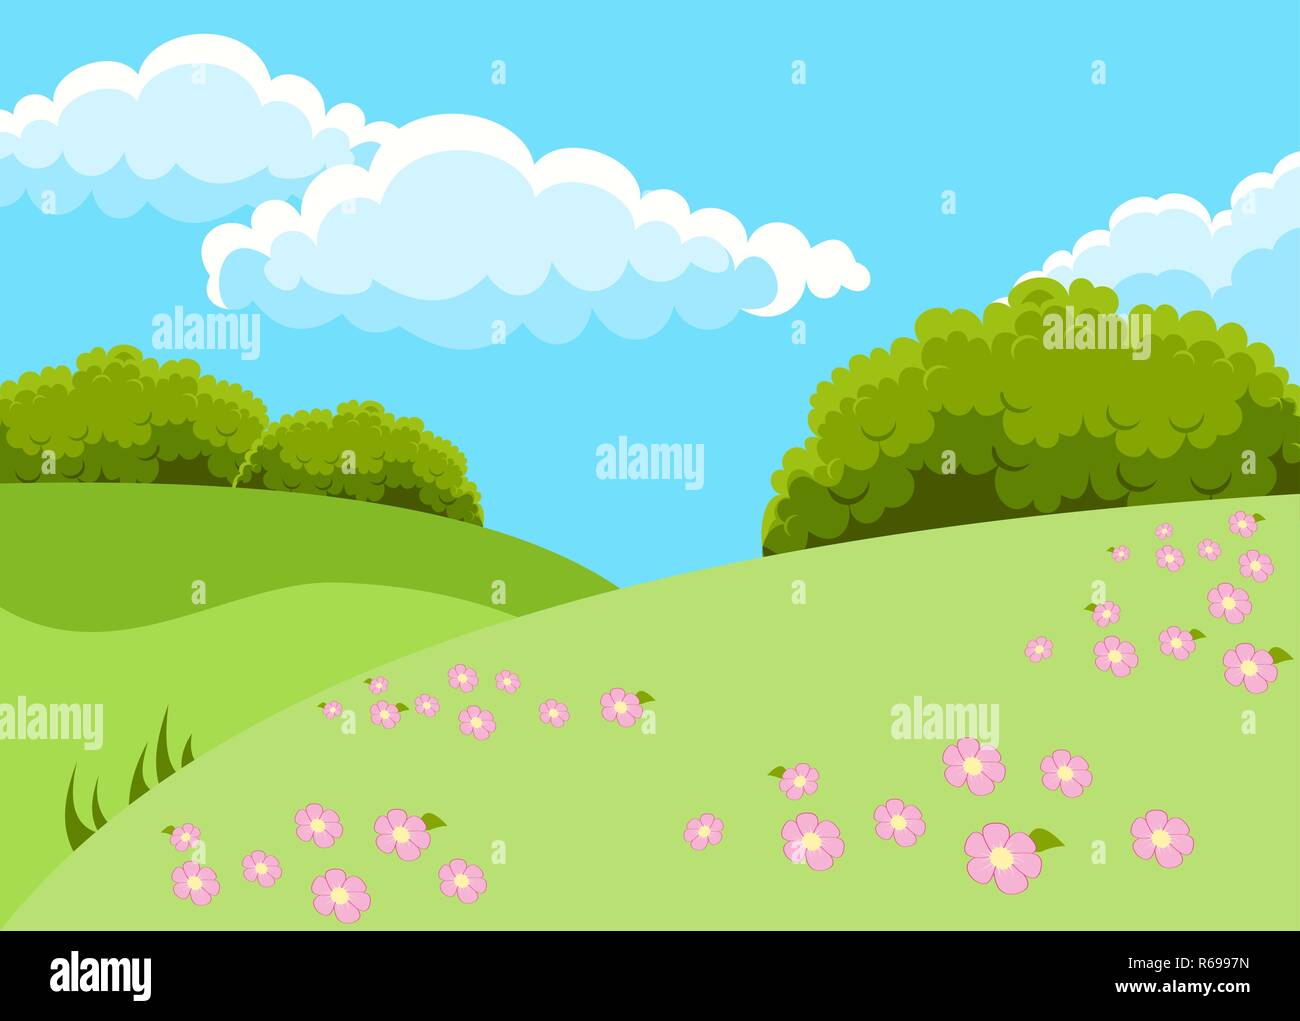 cartoon grassy field background